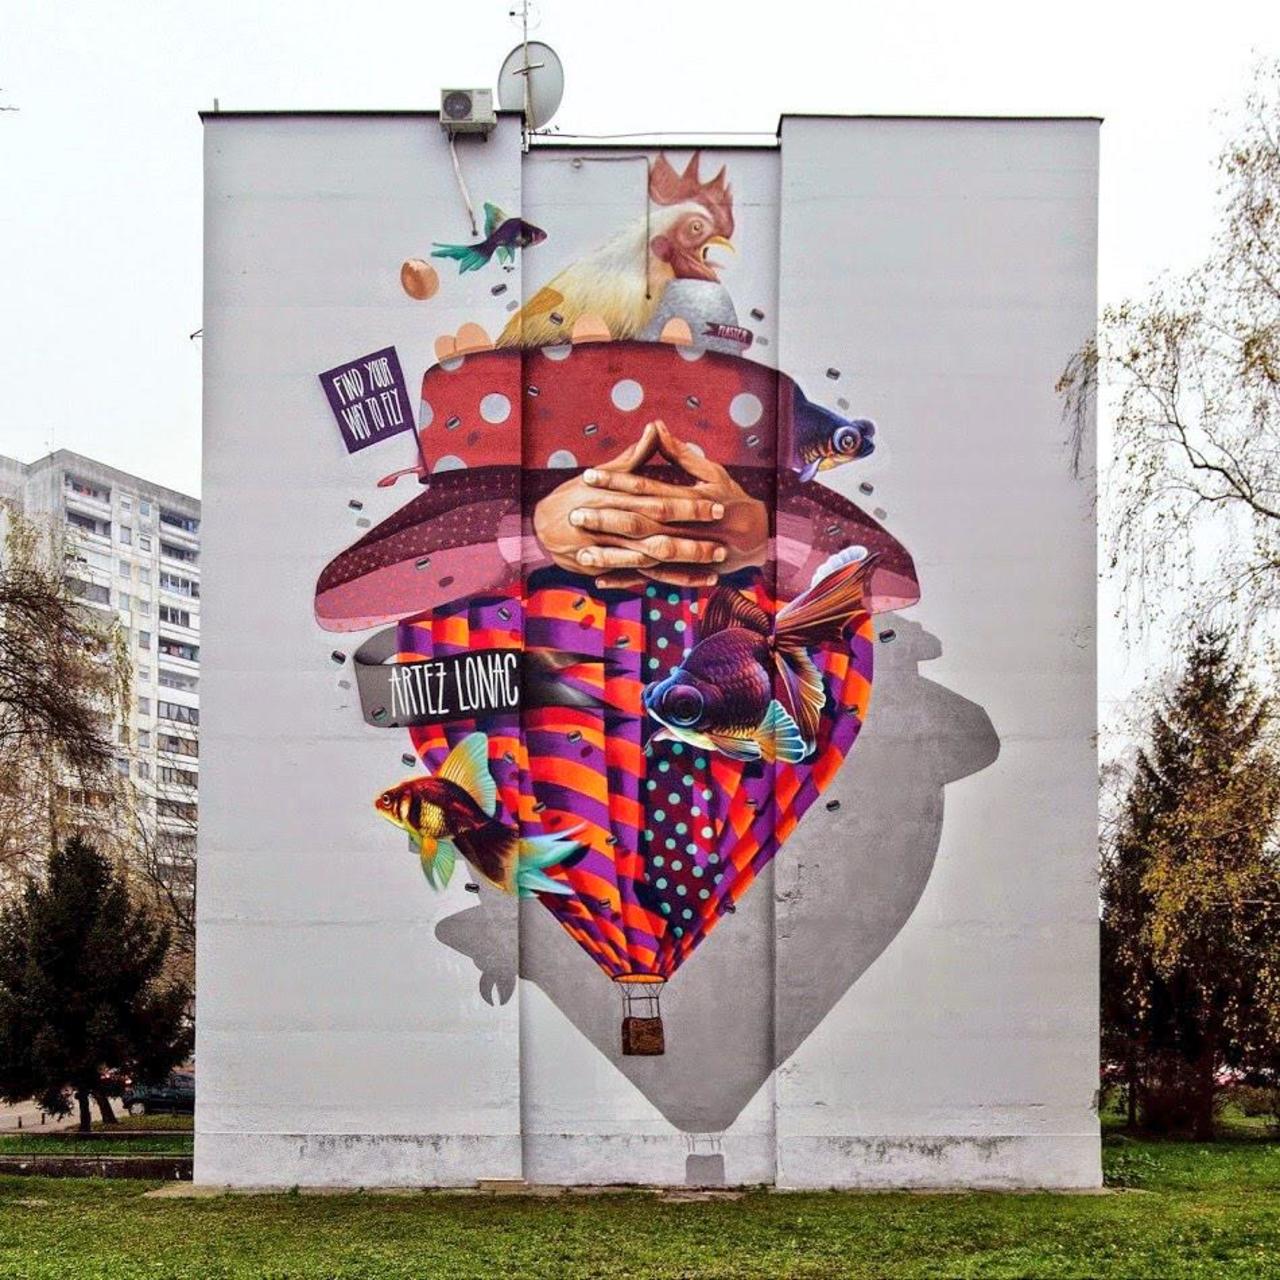 Lonac & Artez 
Banja Luka, Bosnia
#streetart #art #graffiti #mural http://t.co/RL4gXeZvi8